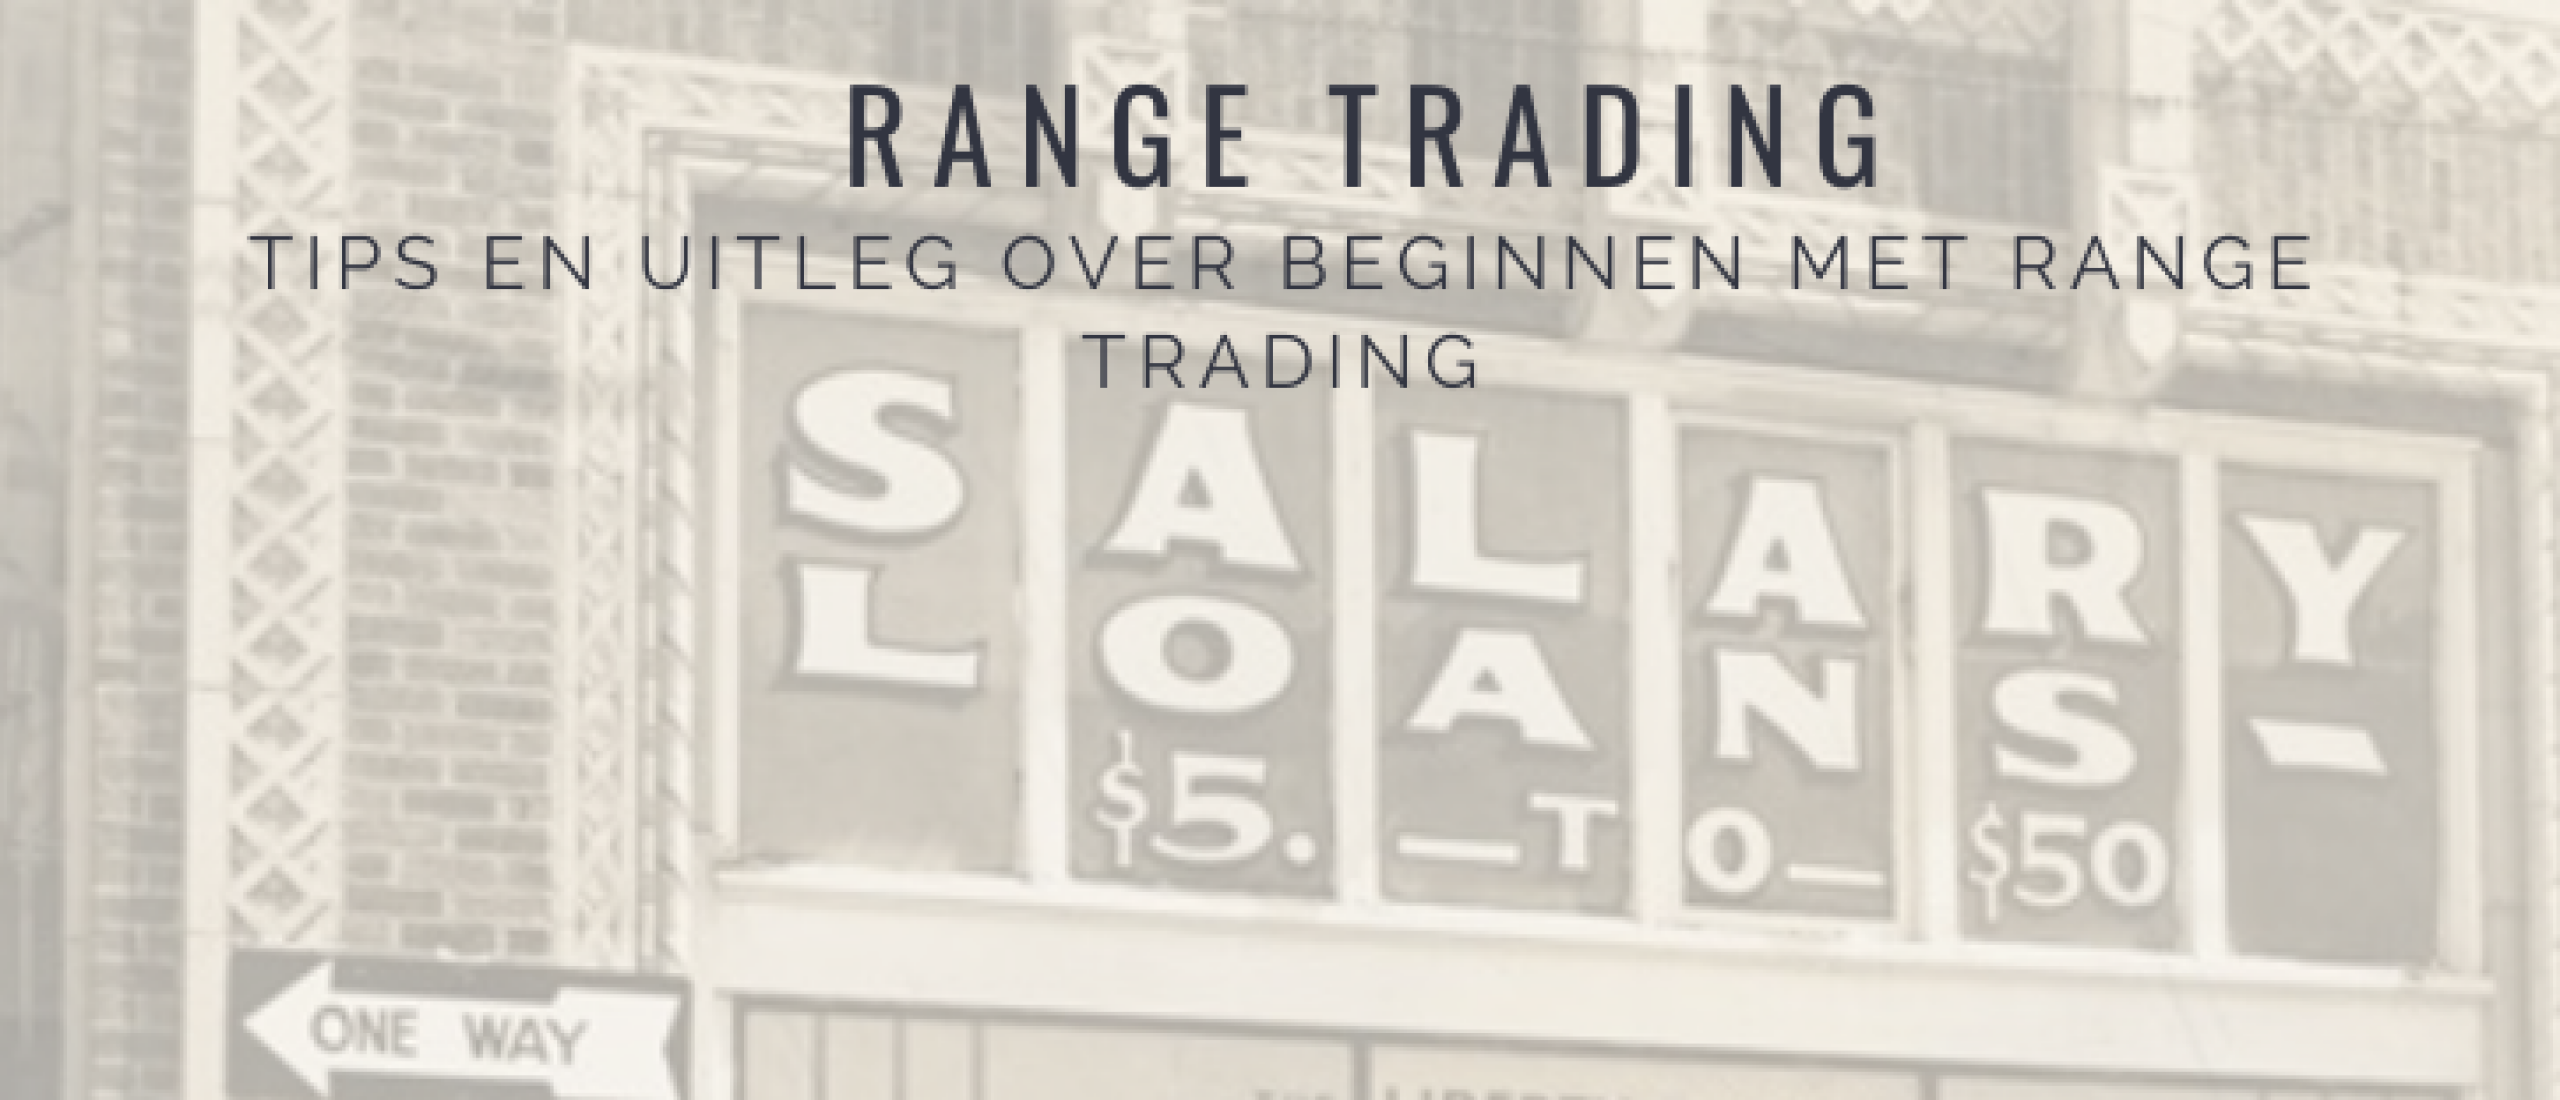 Range Trading Strategie: Tips en Uitleg voor Beginners